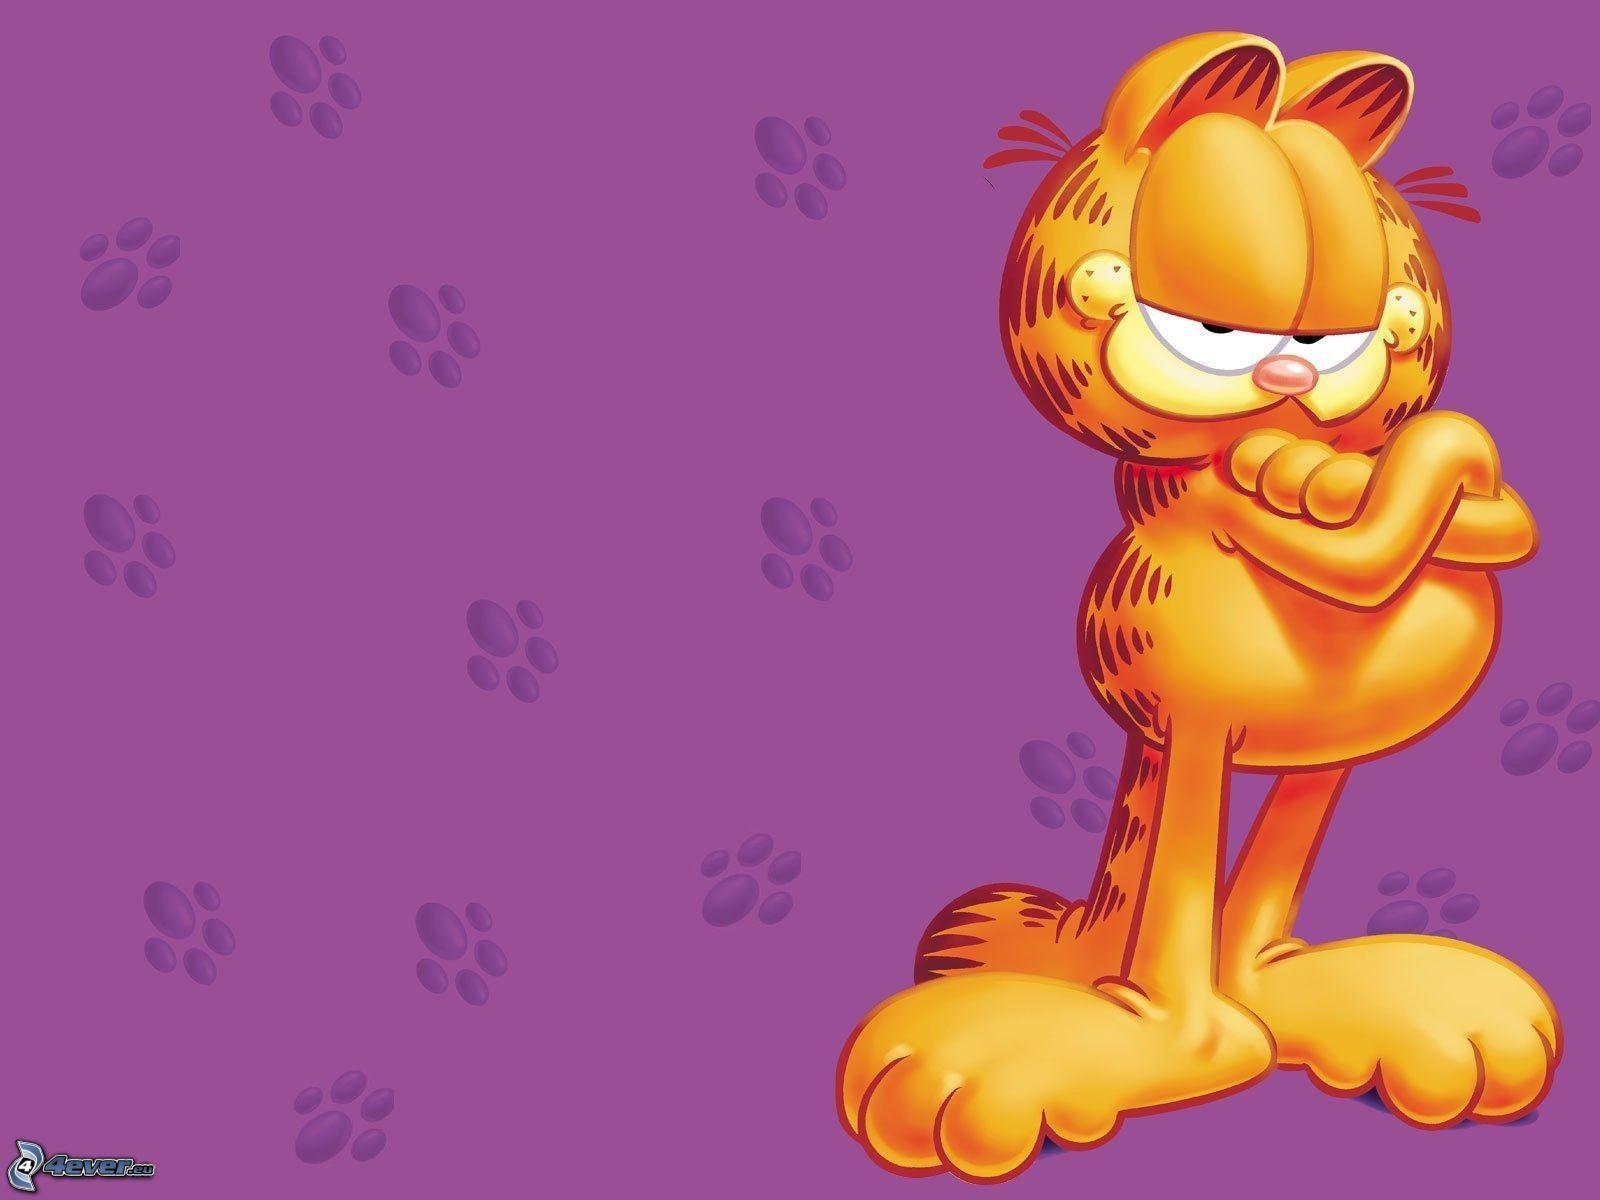 Garfield The Cat Wallpapers - Wallpaper Cave